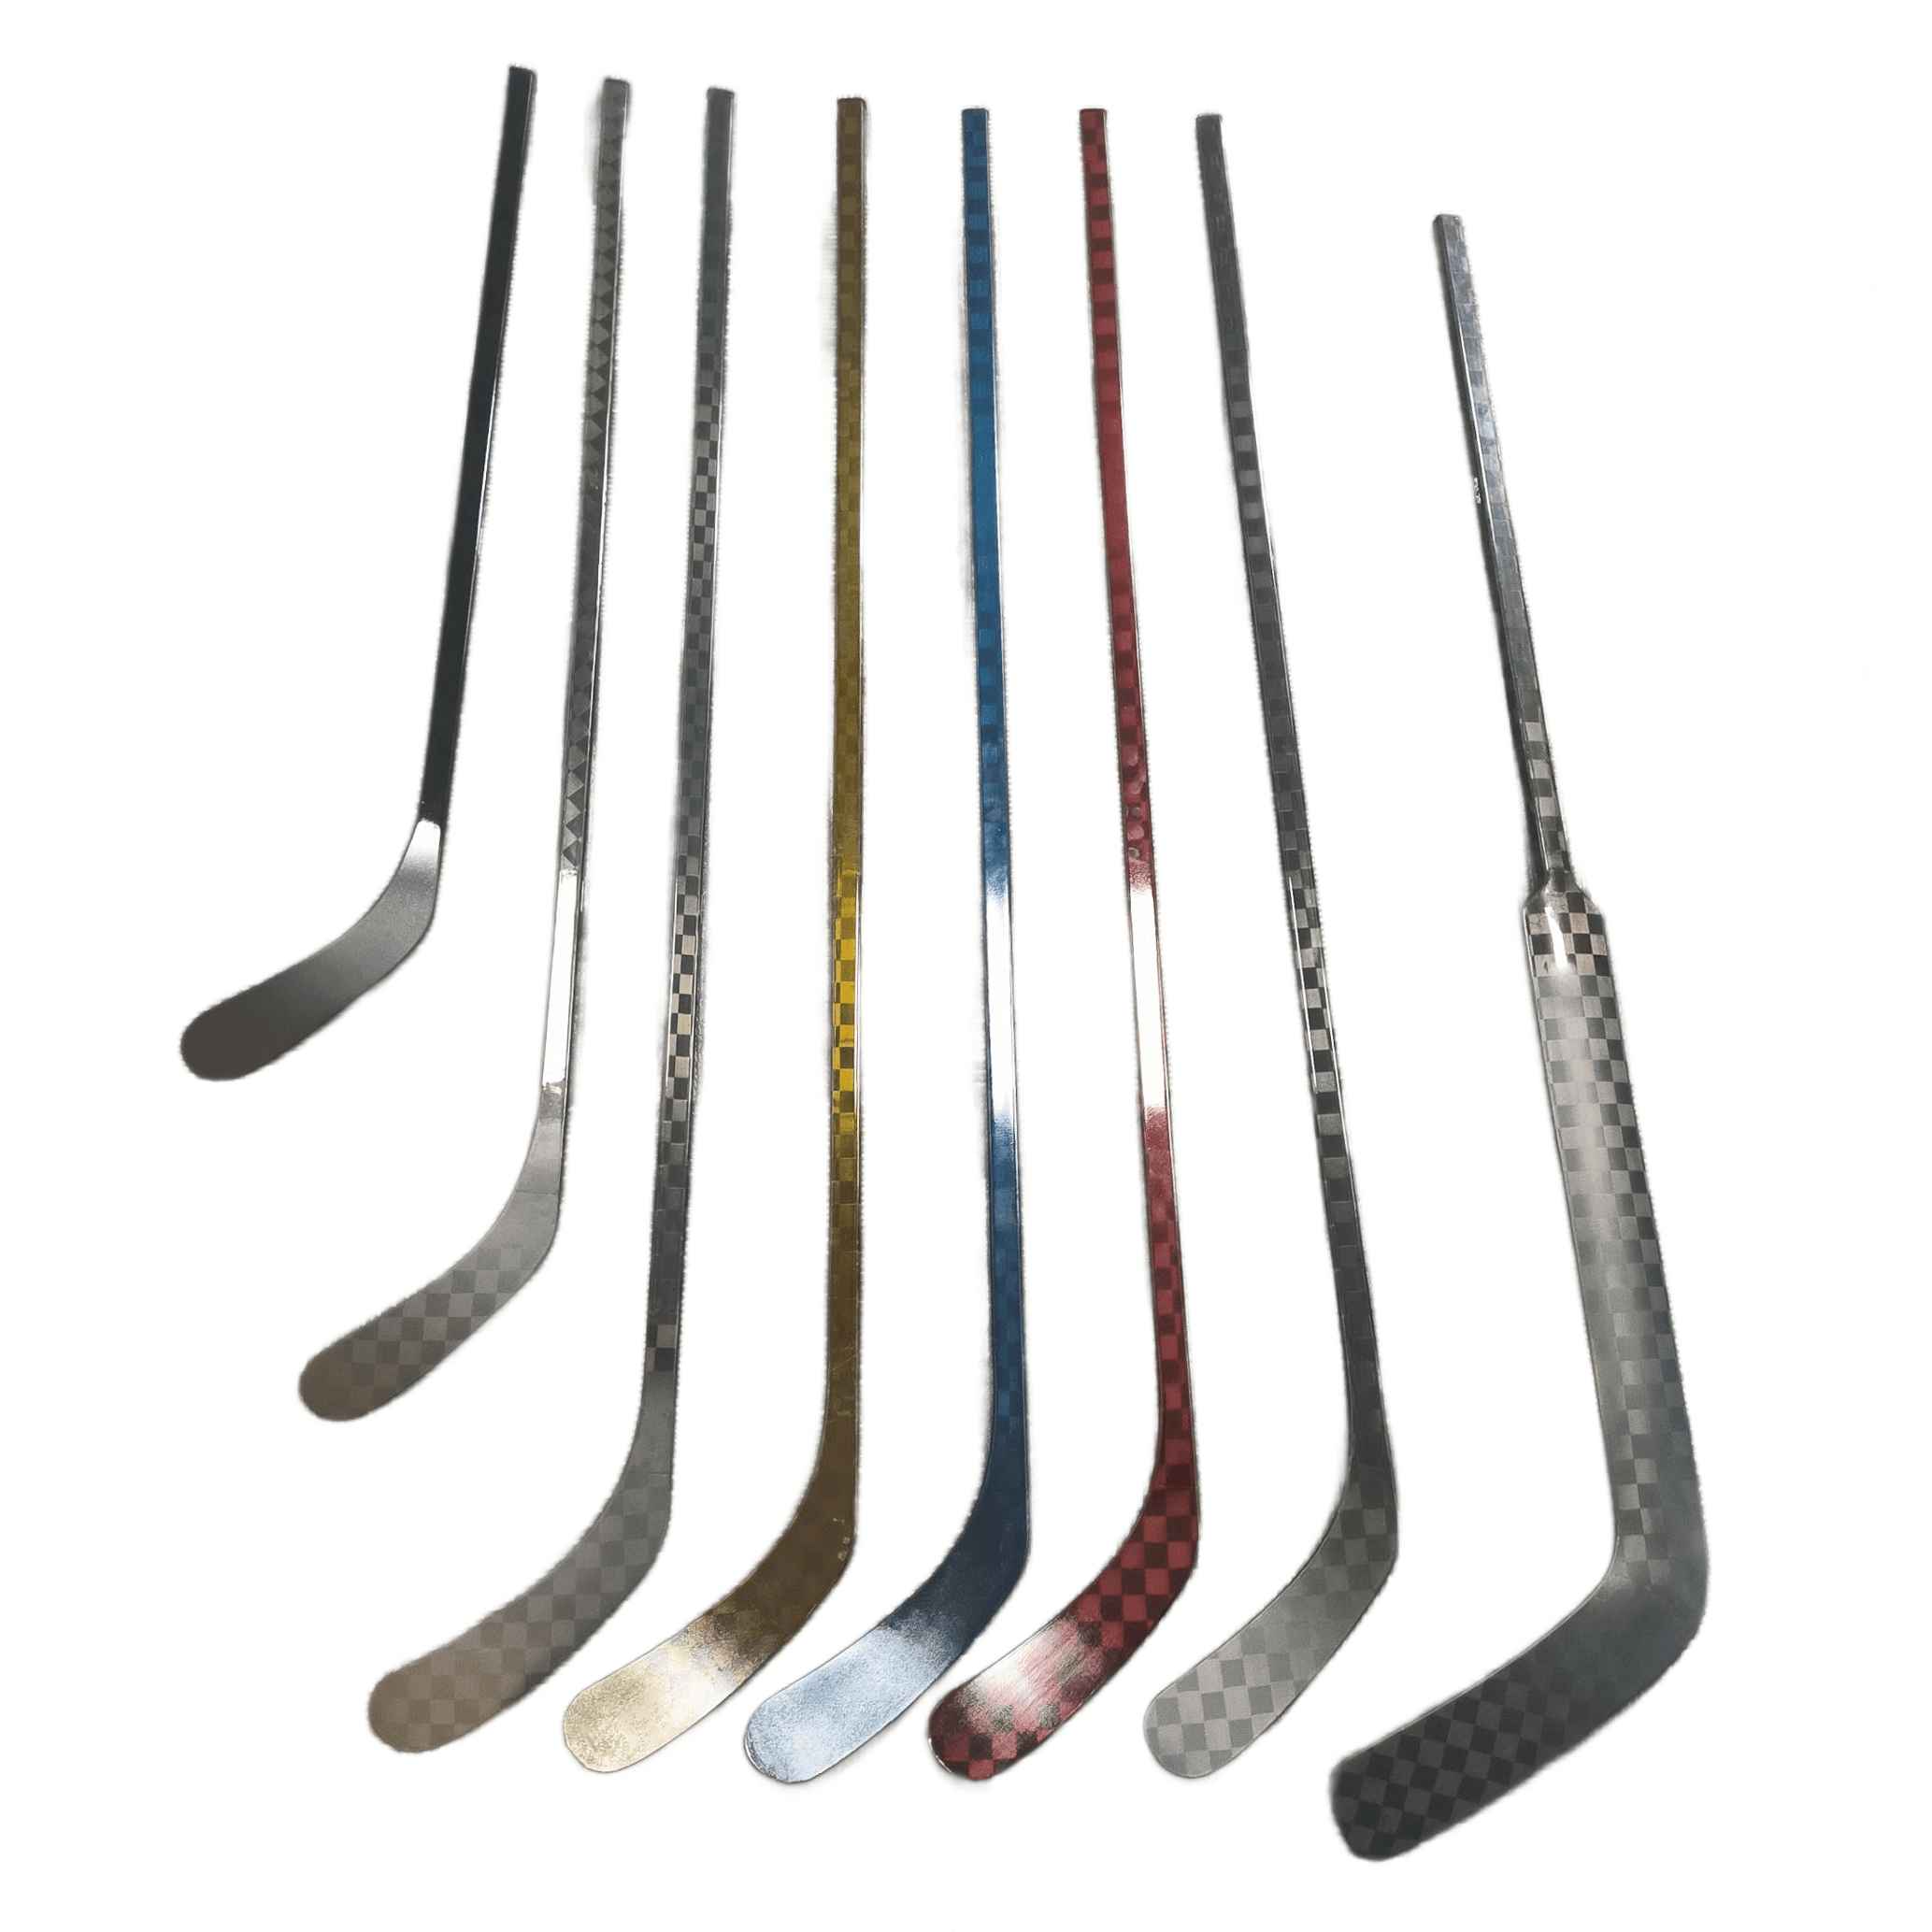 Precision-crafted hockey sticks